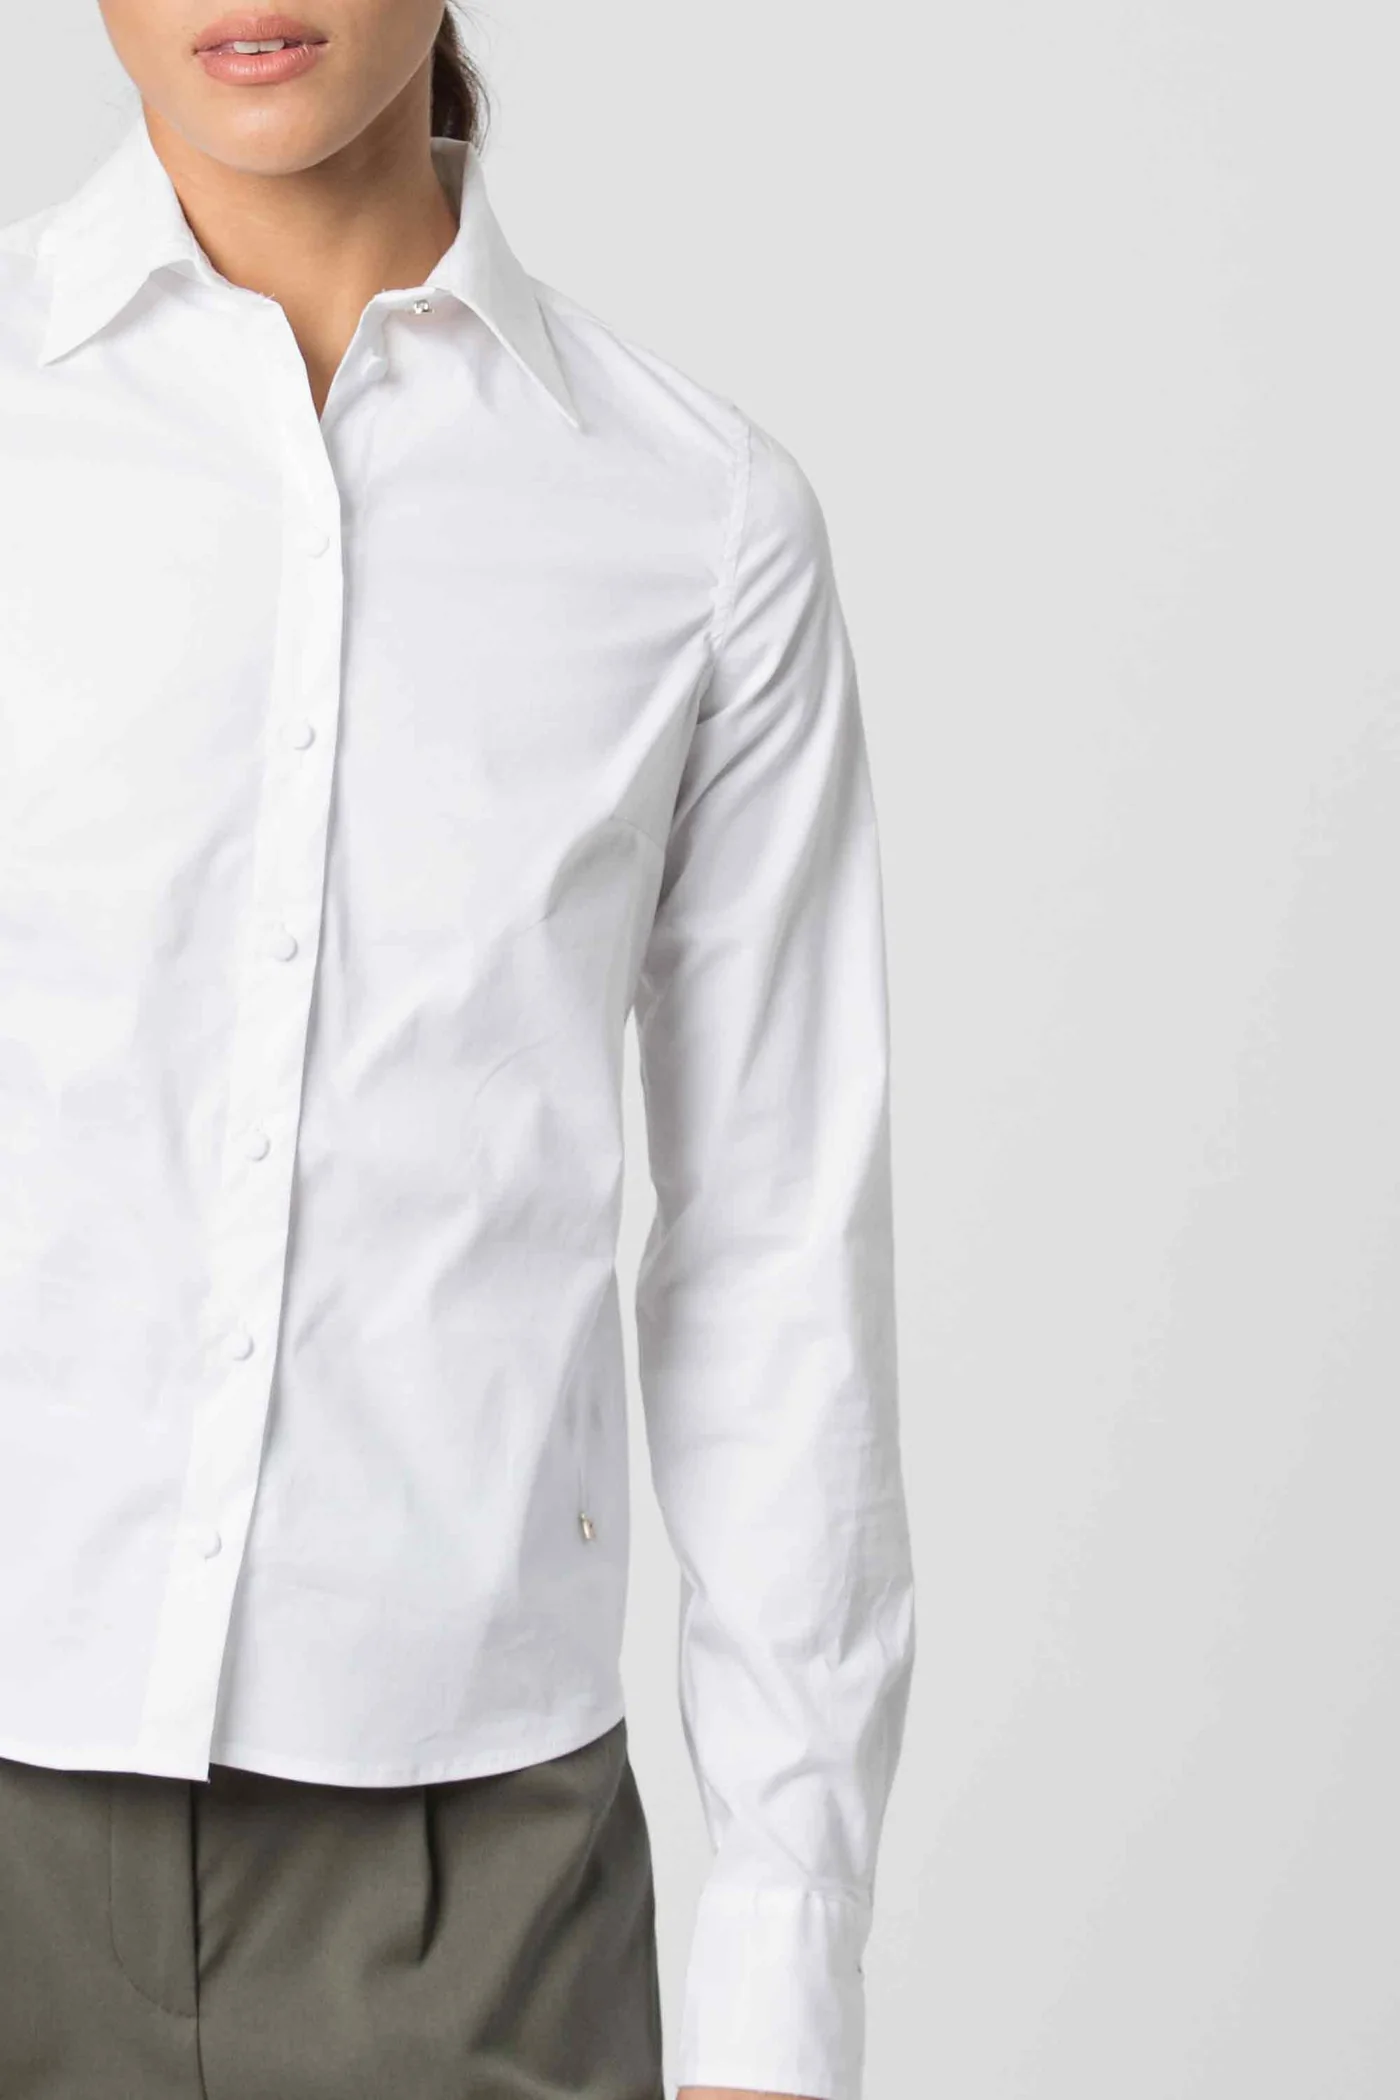 KOCCA camisa color blanco - 3